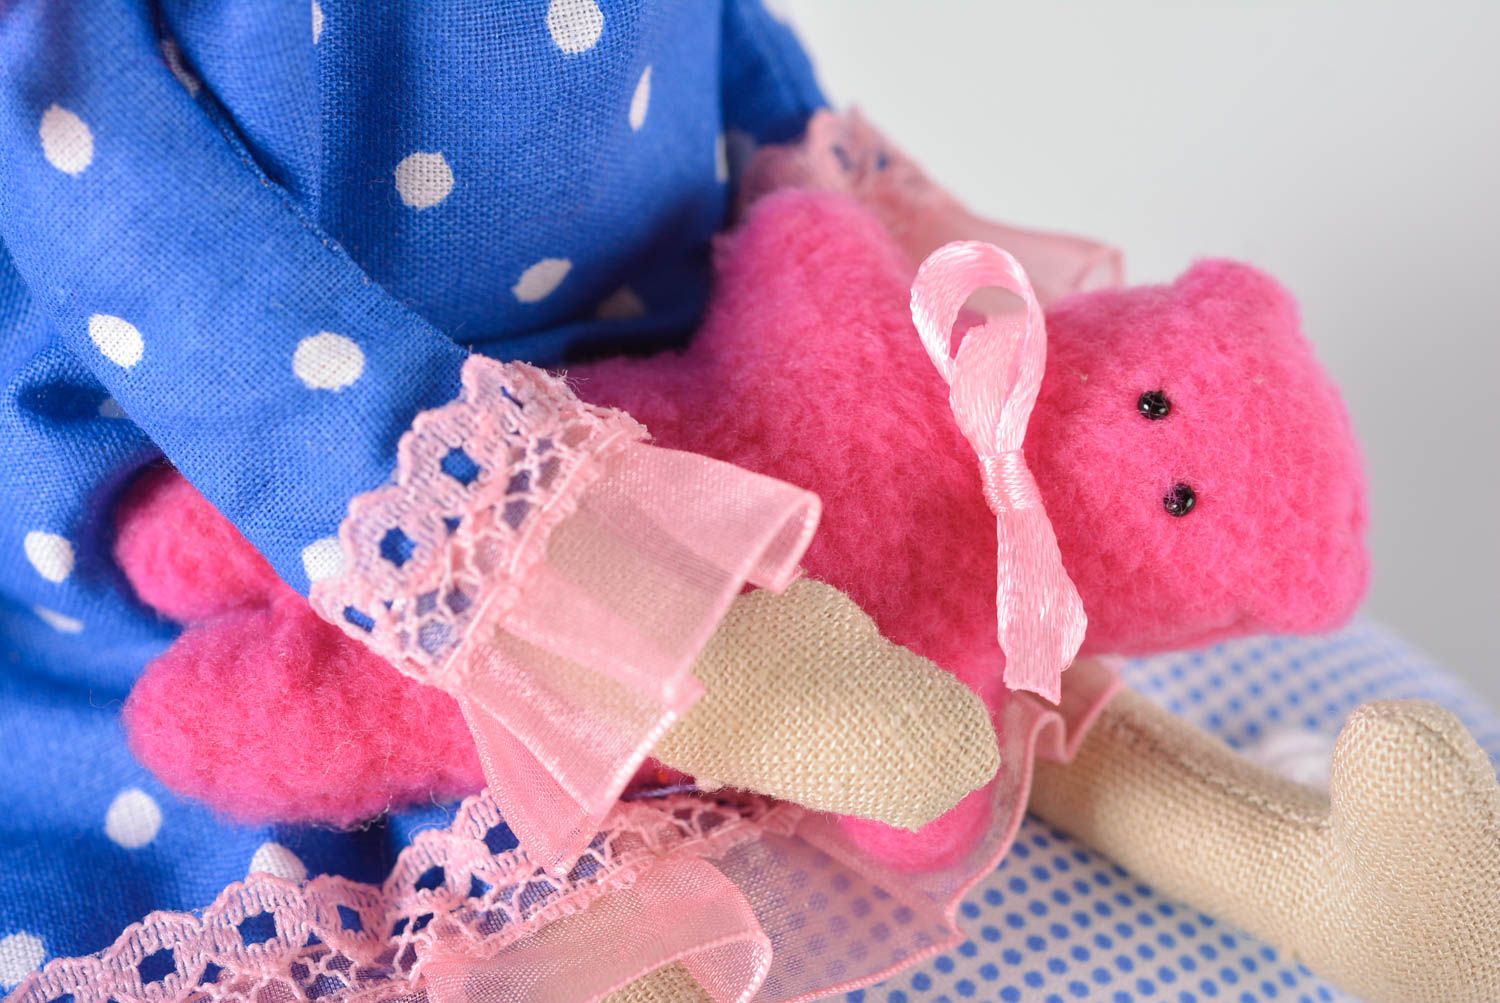 Decorative fabric doll handmade stuffed toy present for baby nursery decor photo 4